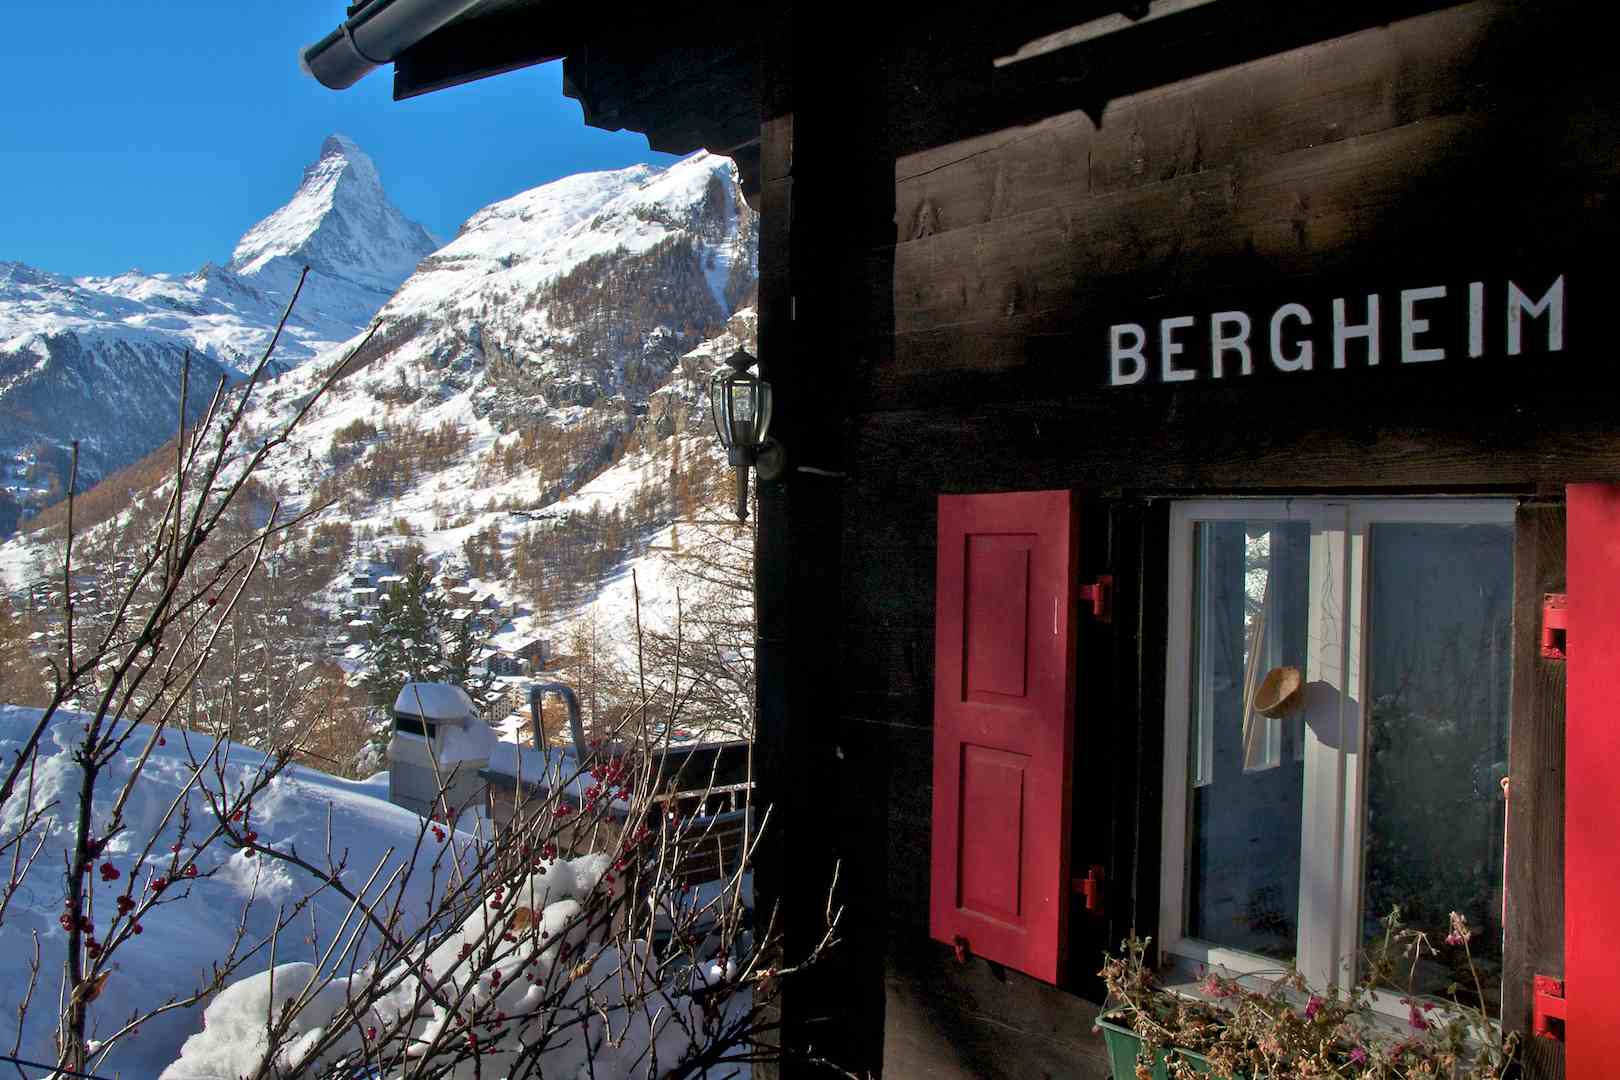 Winter Activities on the Highest Ski Resort in Europe